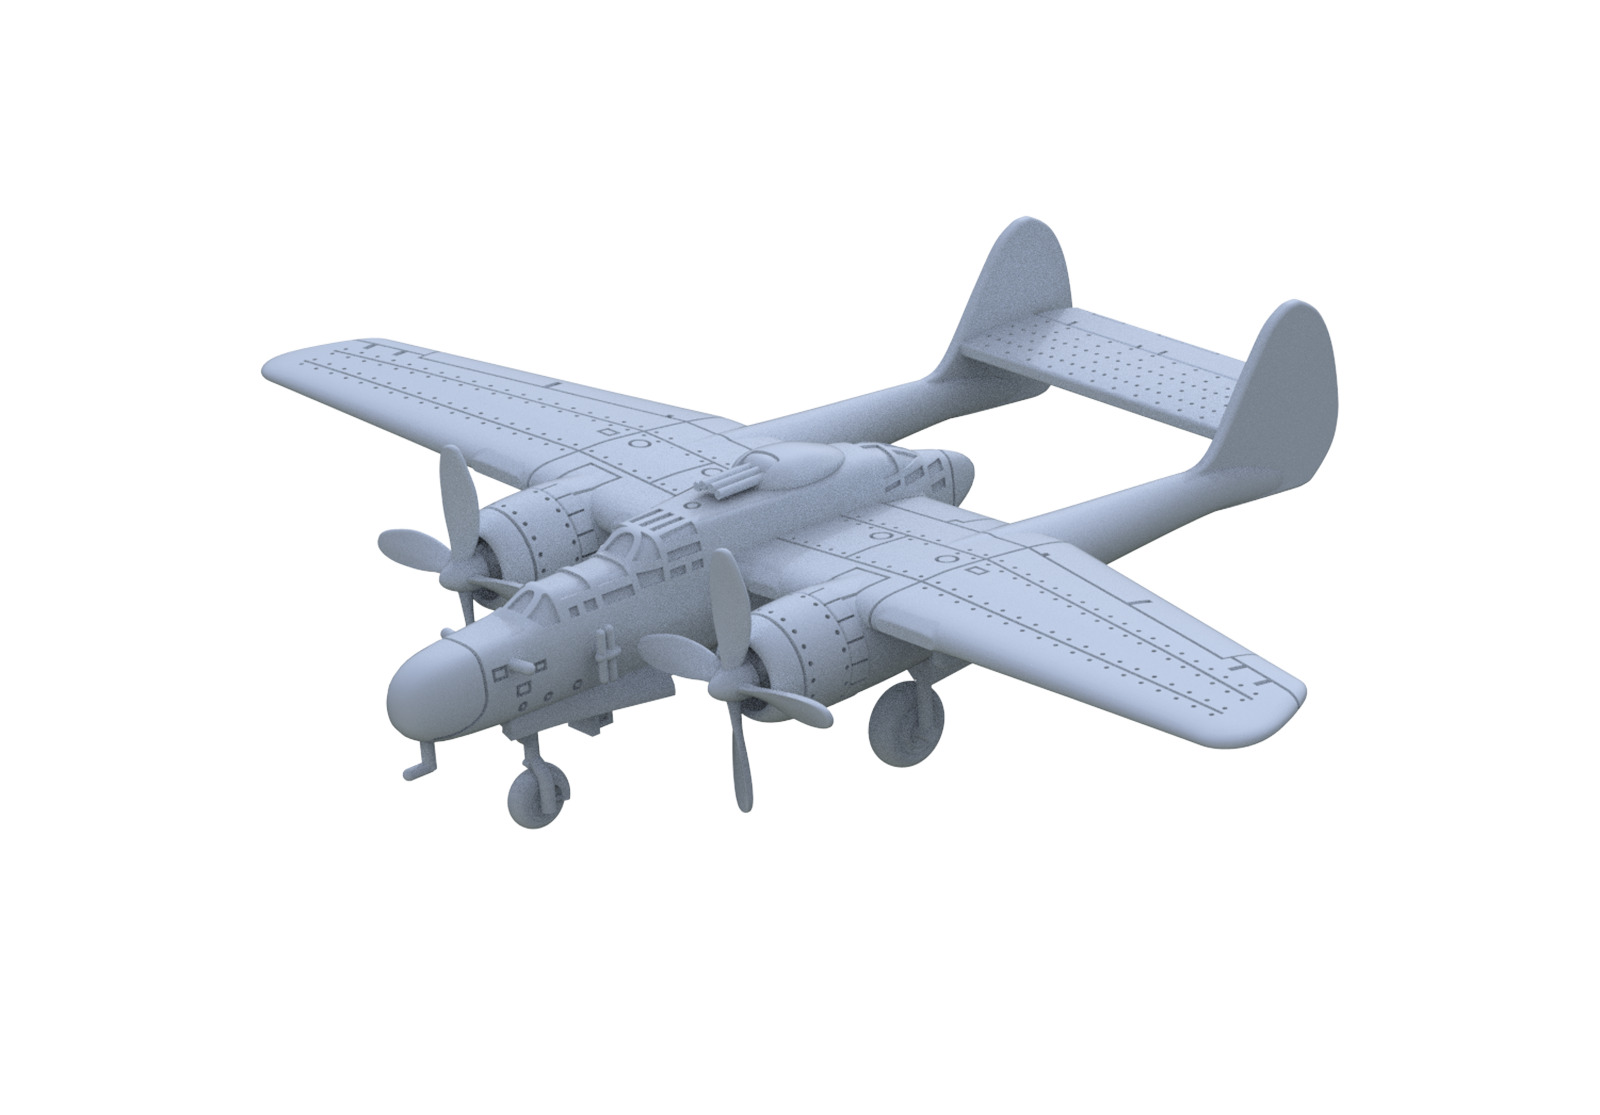 SSMODEL 232 1/700 Kit USAF P-61A-11 Black Widow Fighter WAR WOW WWII GAMES